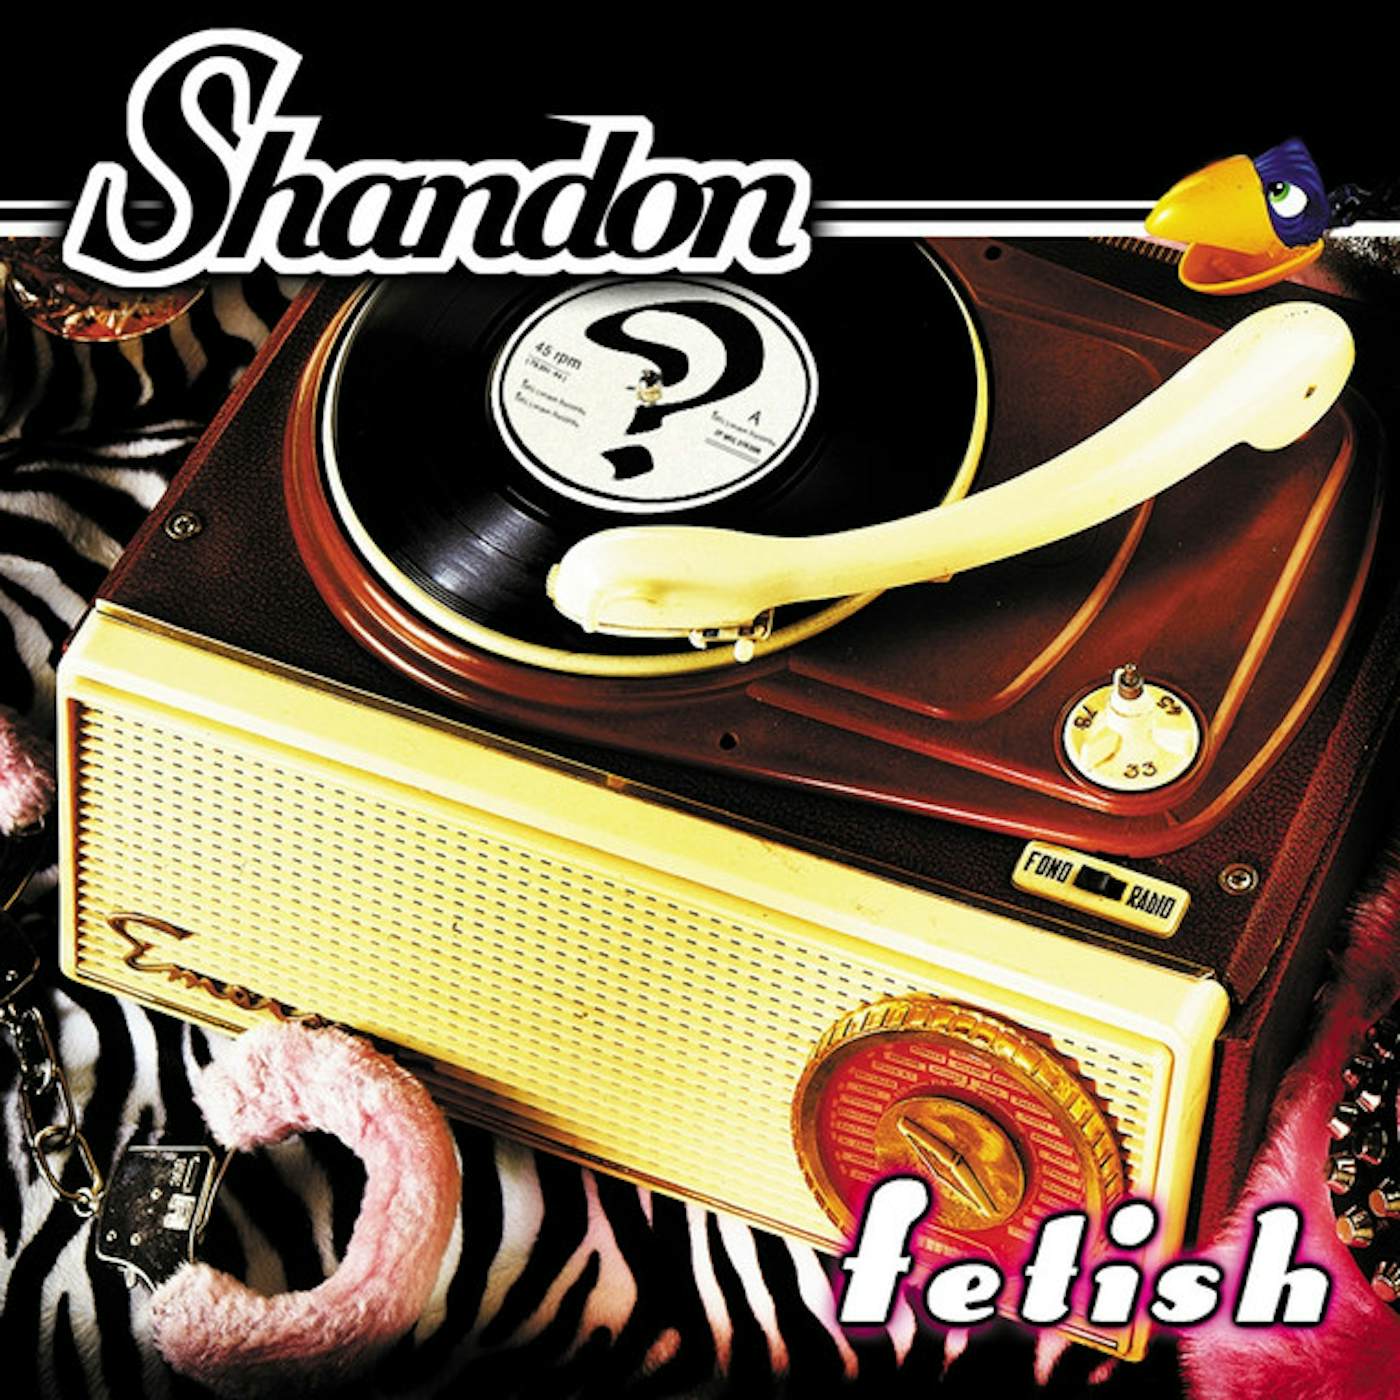 Shandon Fetish Vinyl Record